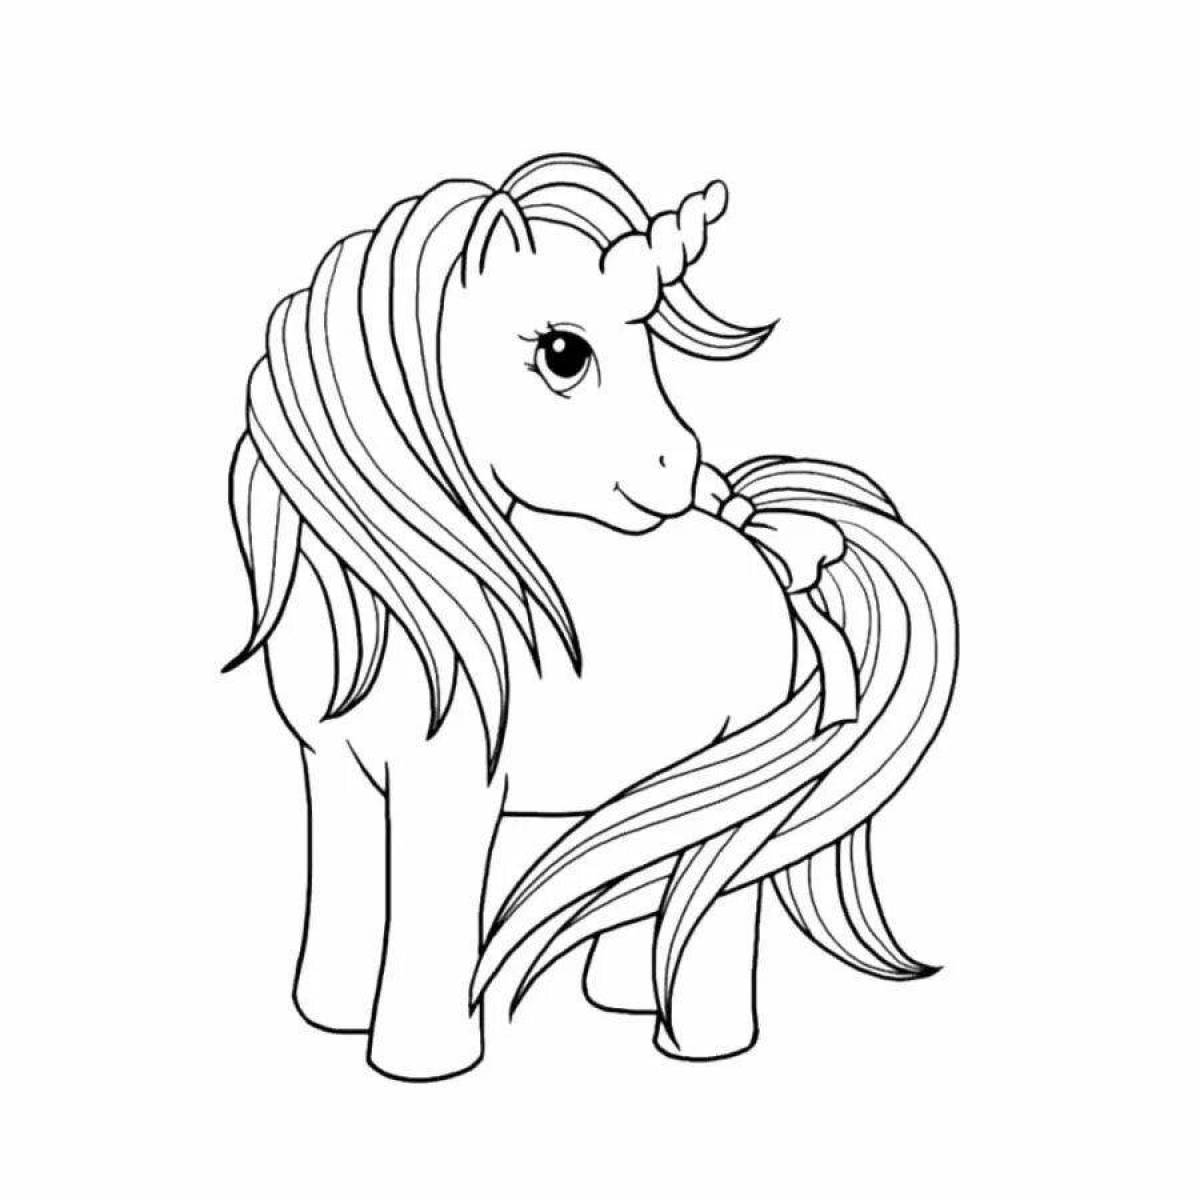 Attractive coloring page include unicorns